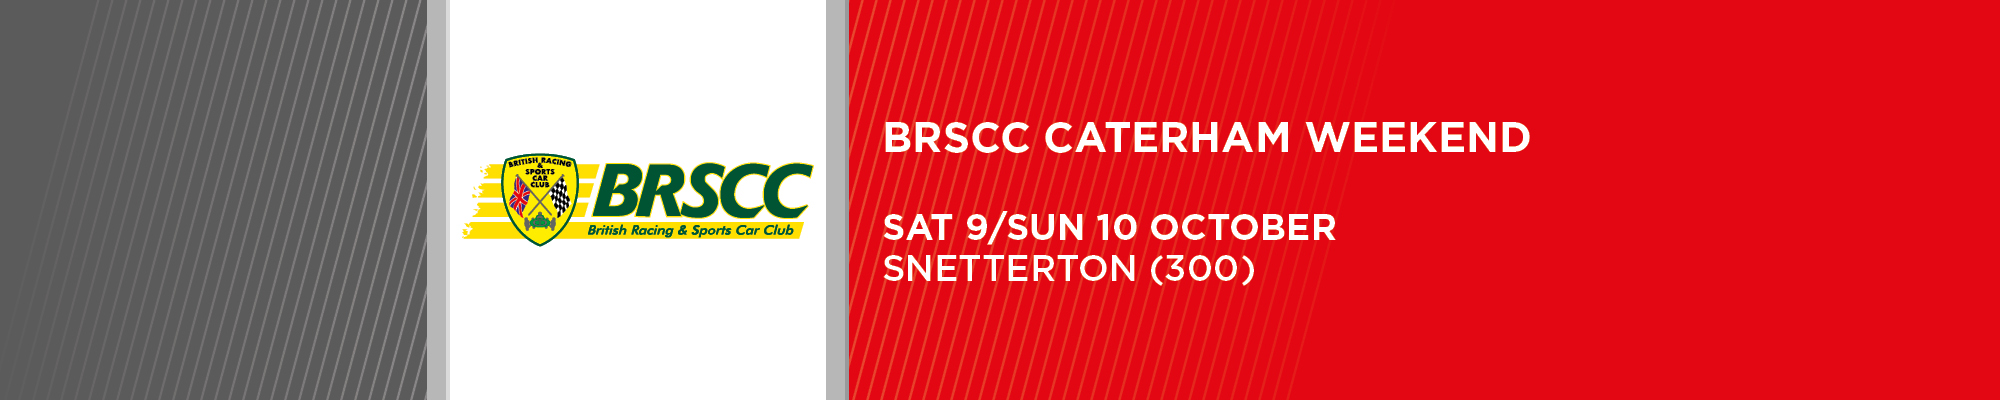 BRSCC Caterham Weekend